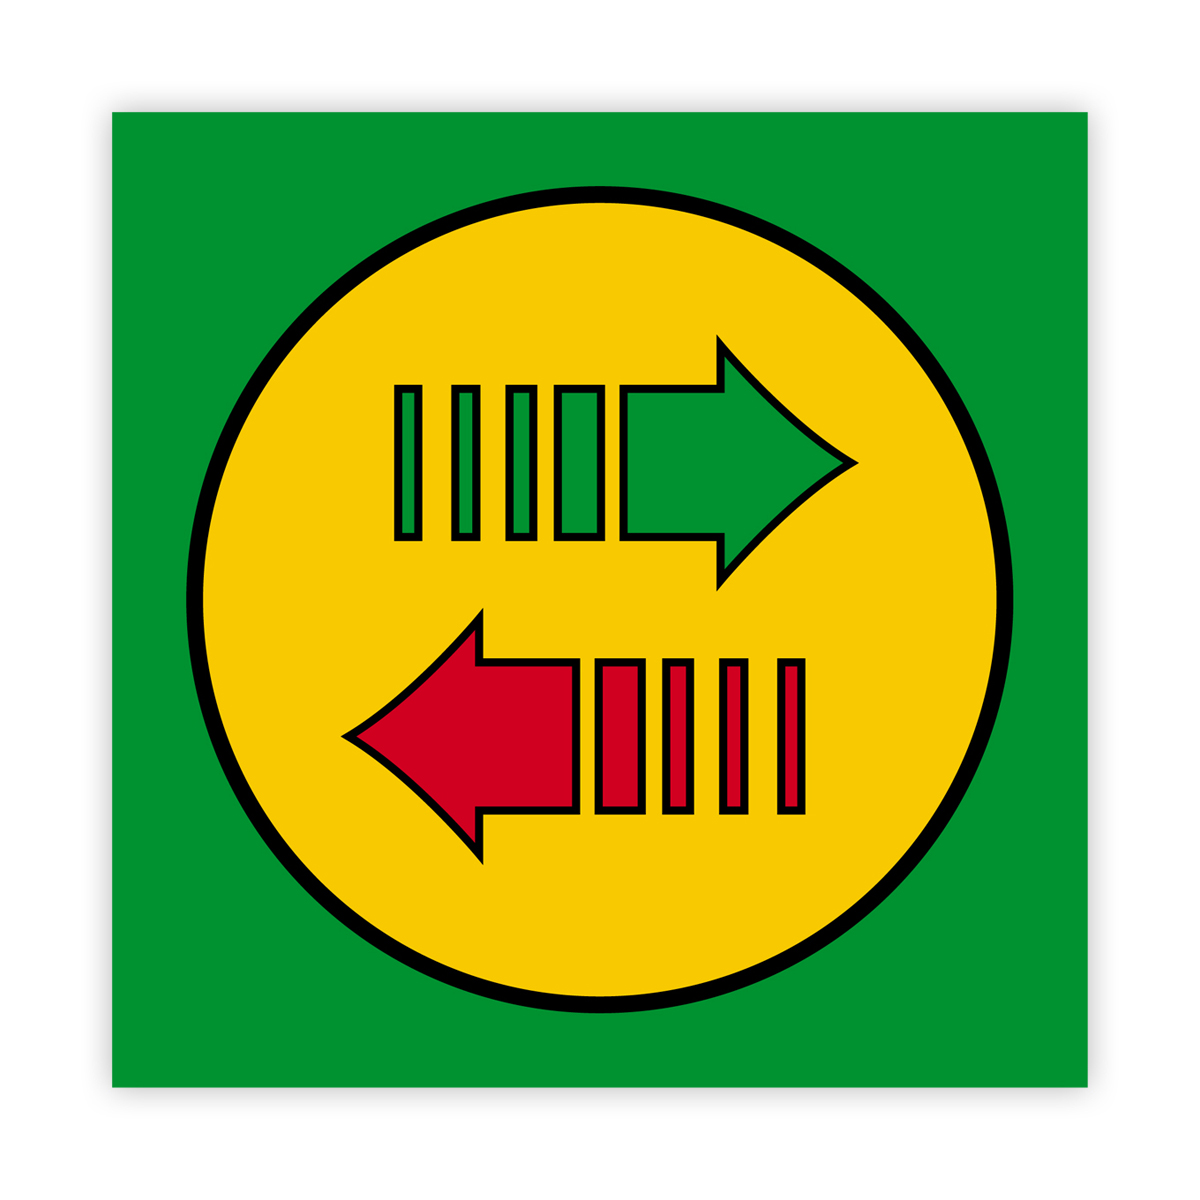 National needle exchange symbol: sticker